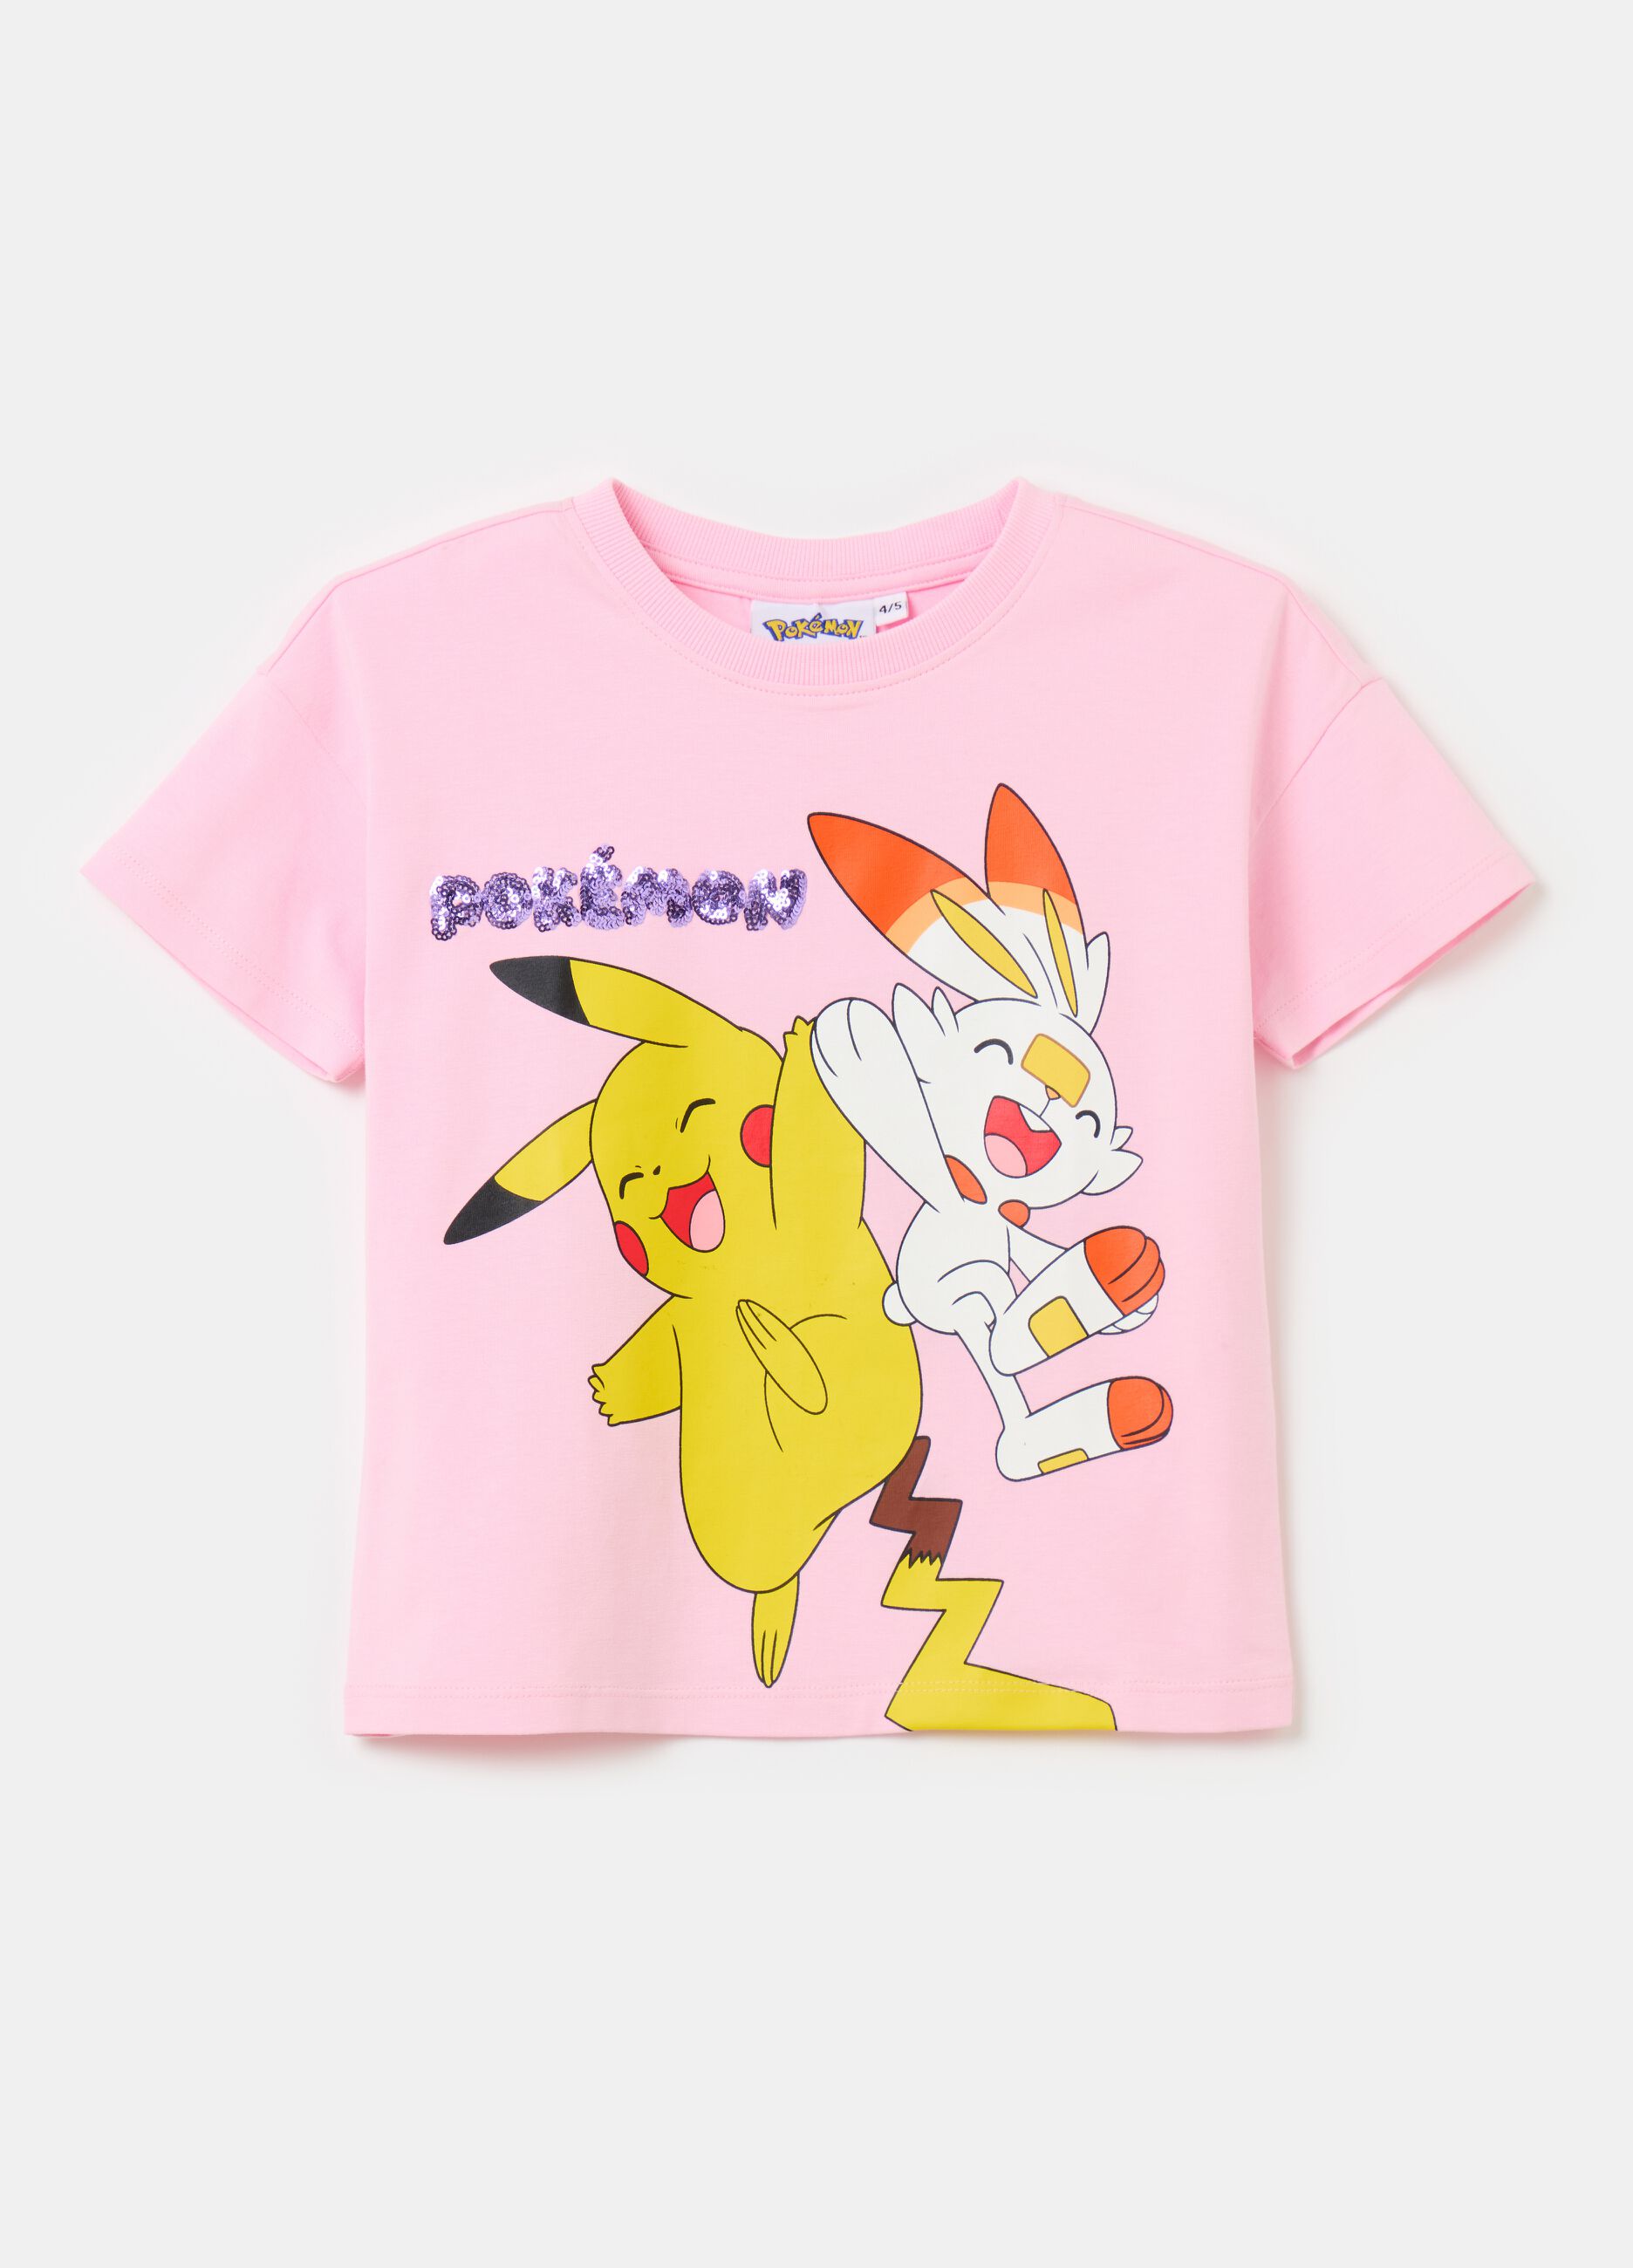 Camiseta corta estampado Pokémon con lentejuelas